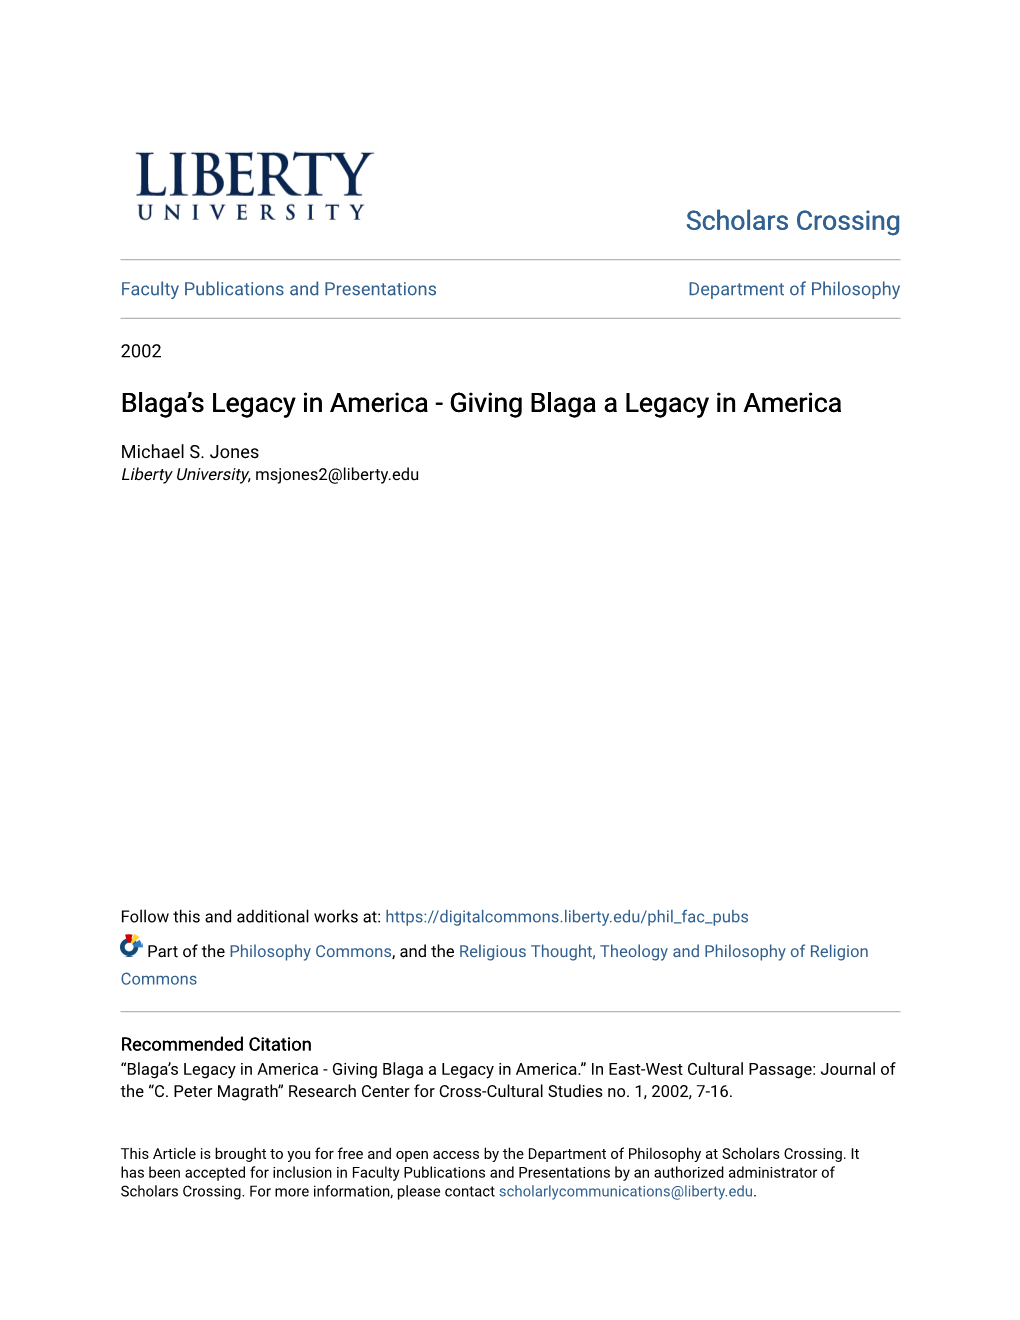 Giving Blaga a Legacy in America